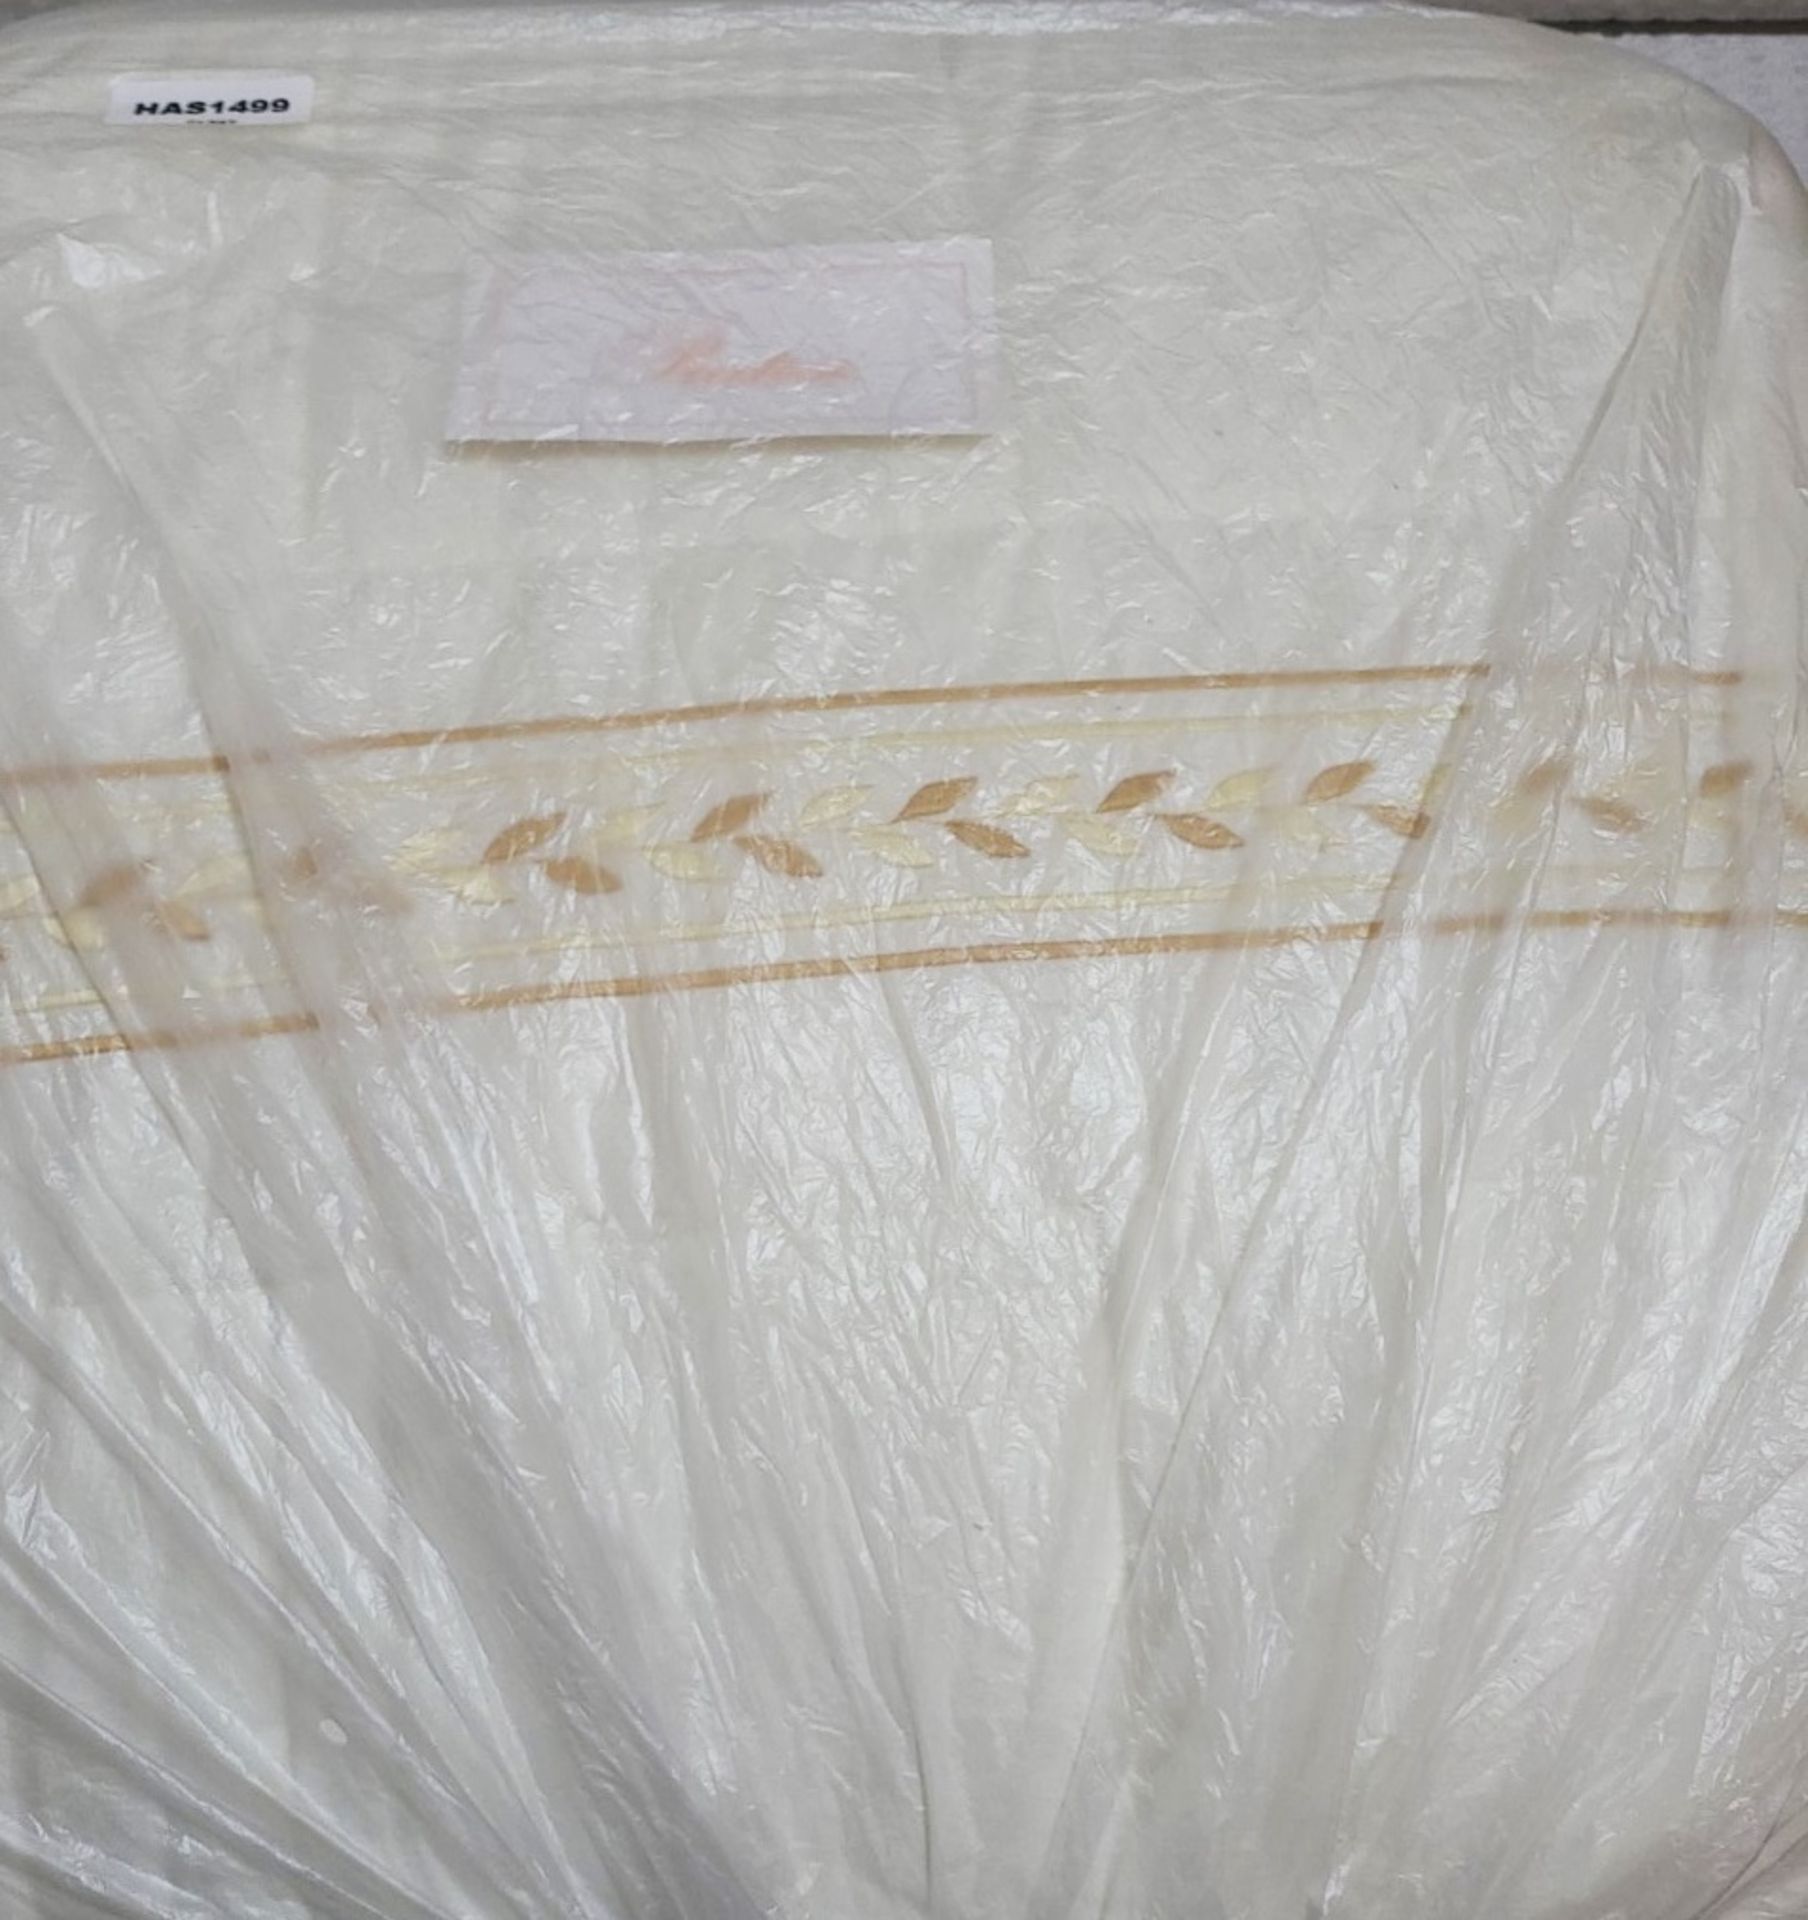 1 x PRATESI Impero Gold Embroidery Quilt in Angel Skin (240x260cm) - Original Price £1,580.00 - Image 3 of 5